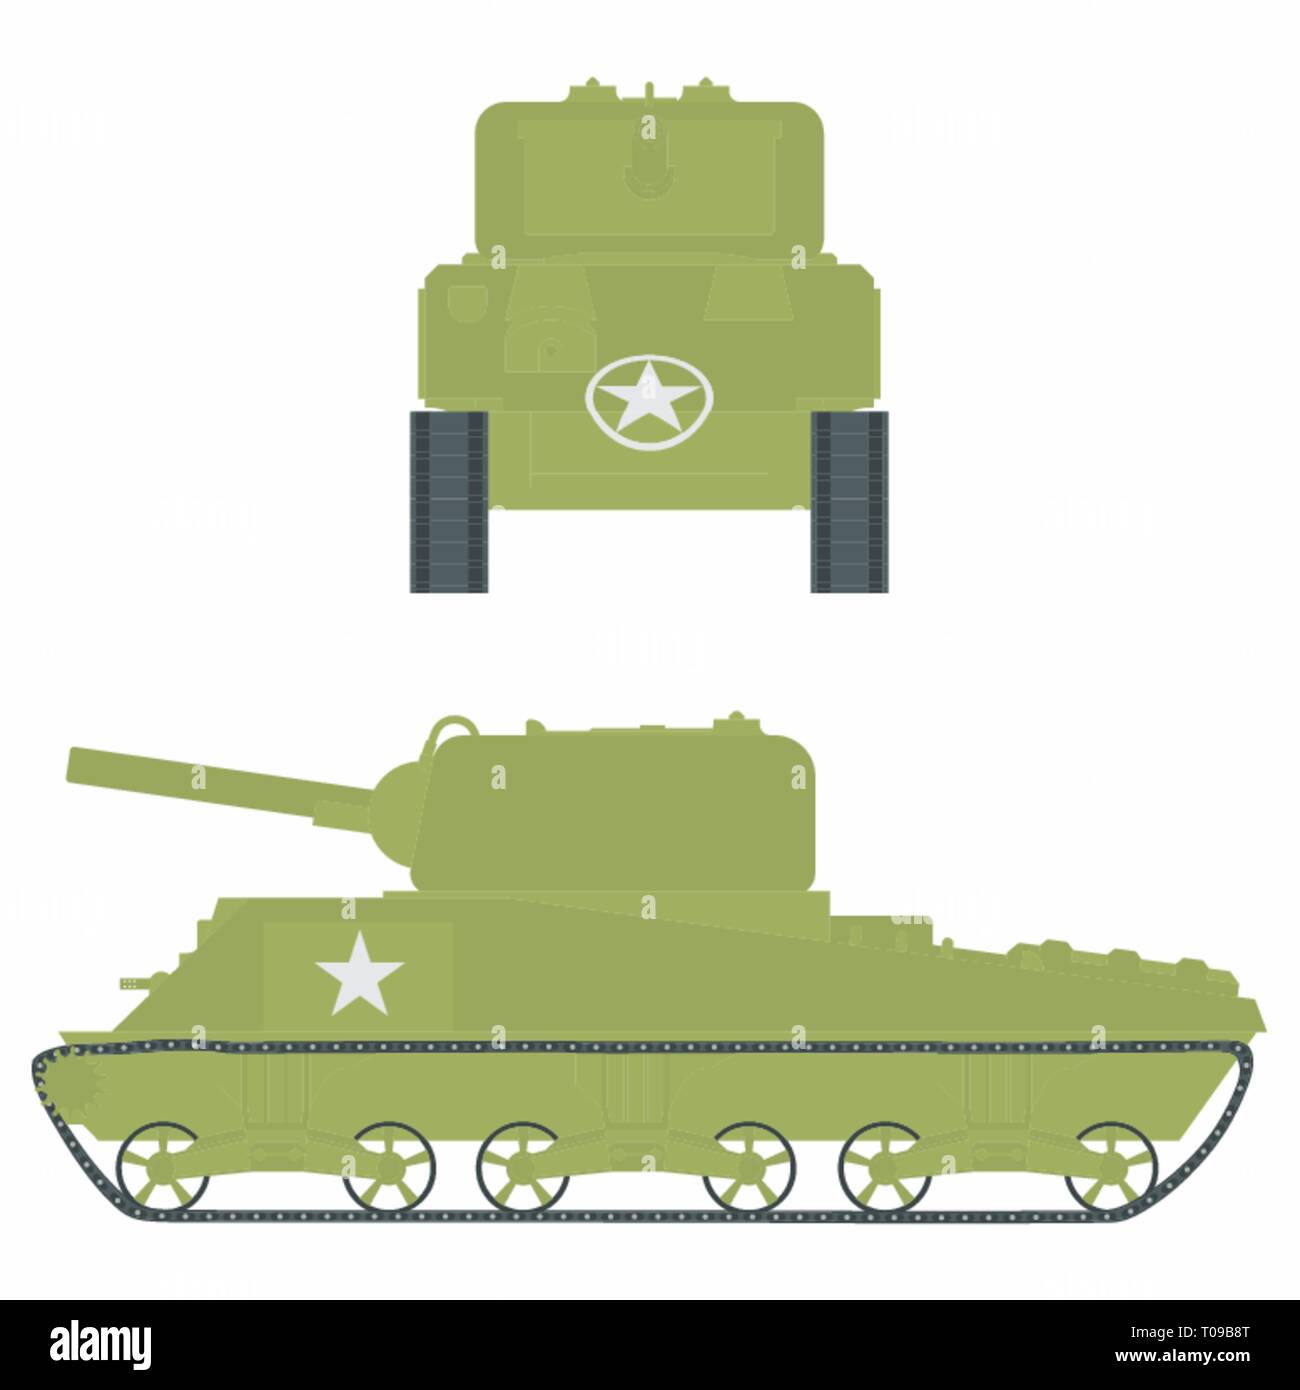 M4 sherman tank. Stock Vector